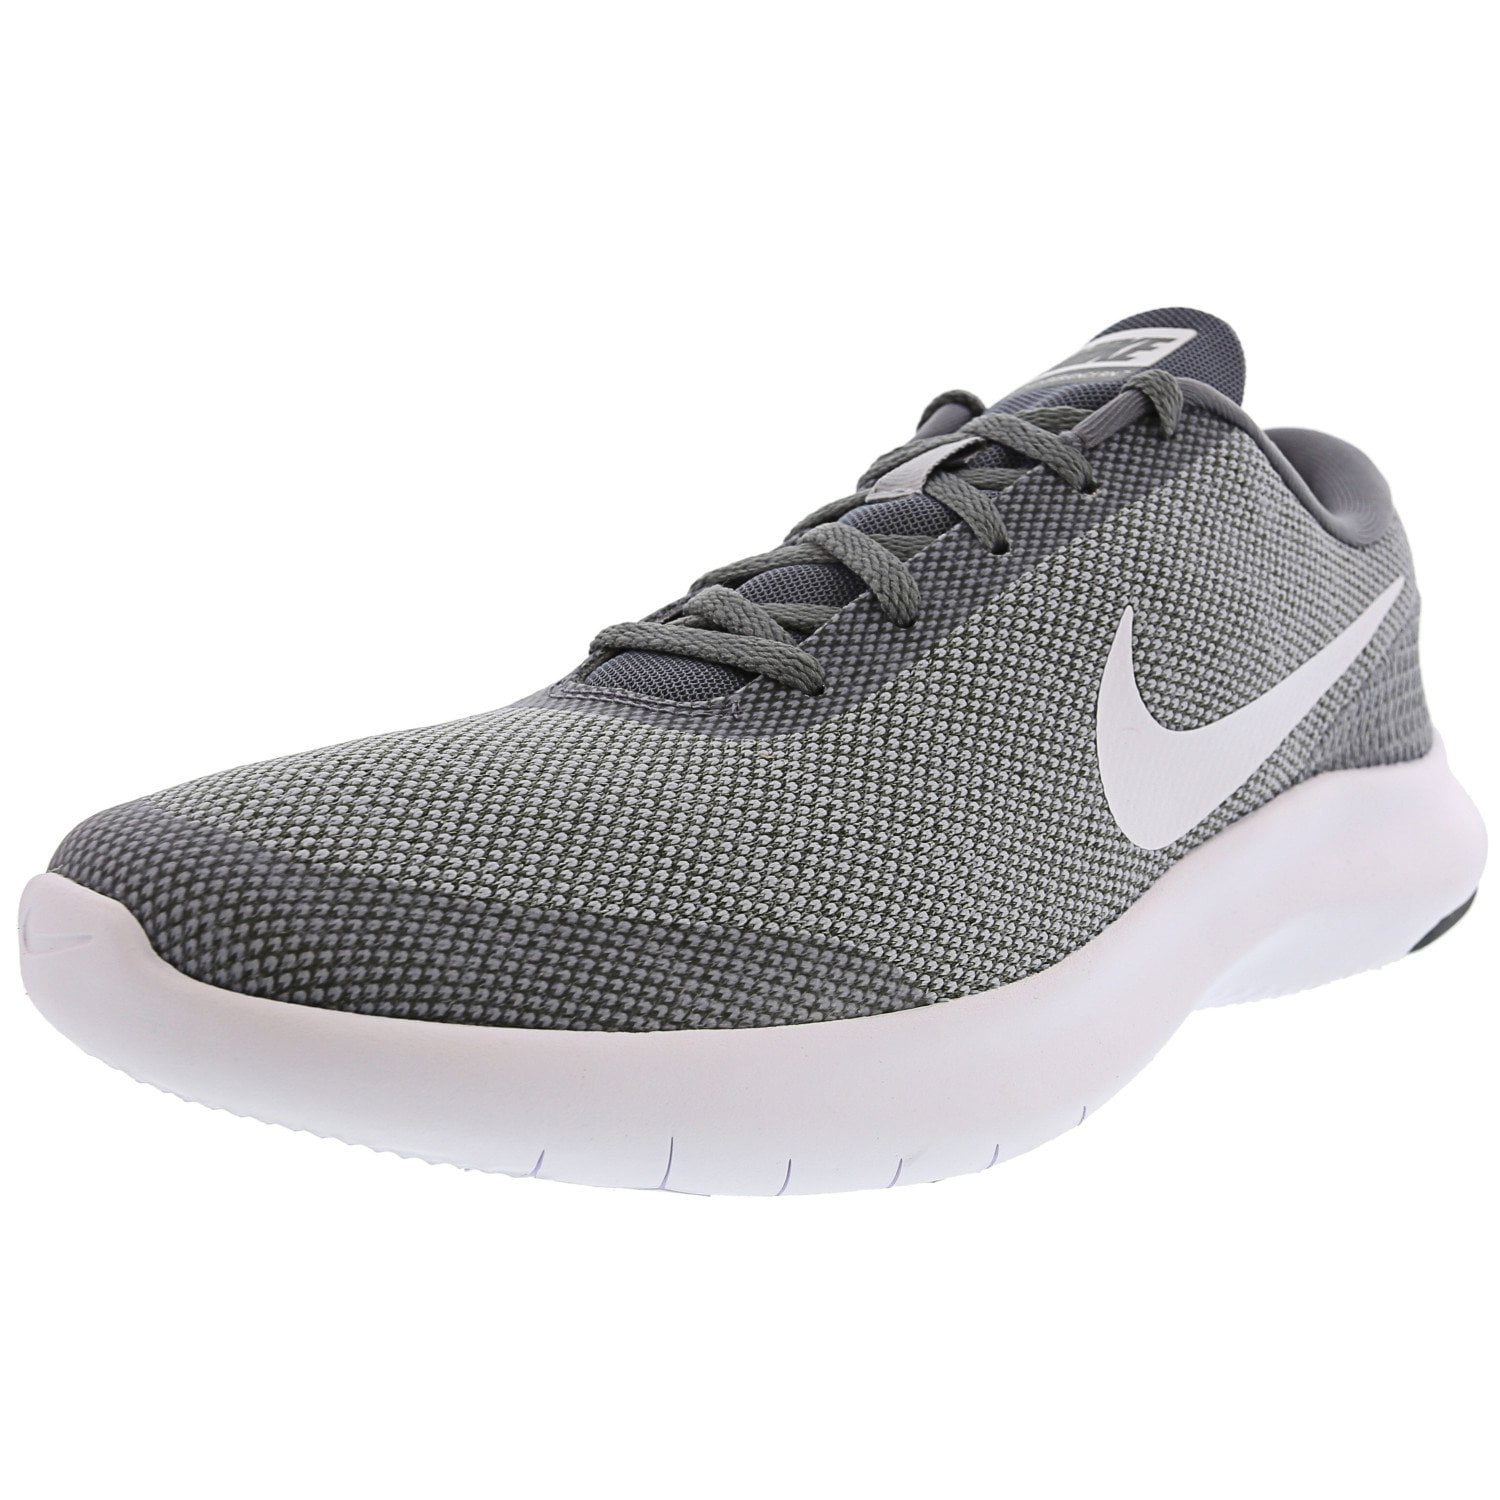 Nike Flex Experience RN 7 Men?s Running Shoes - 10.5M - Grey / White / Cool - Walmart.com